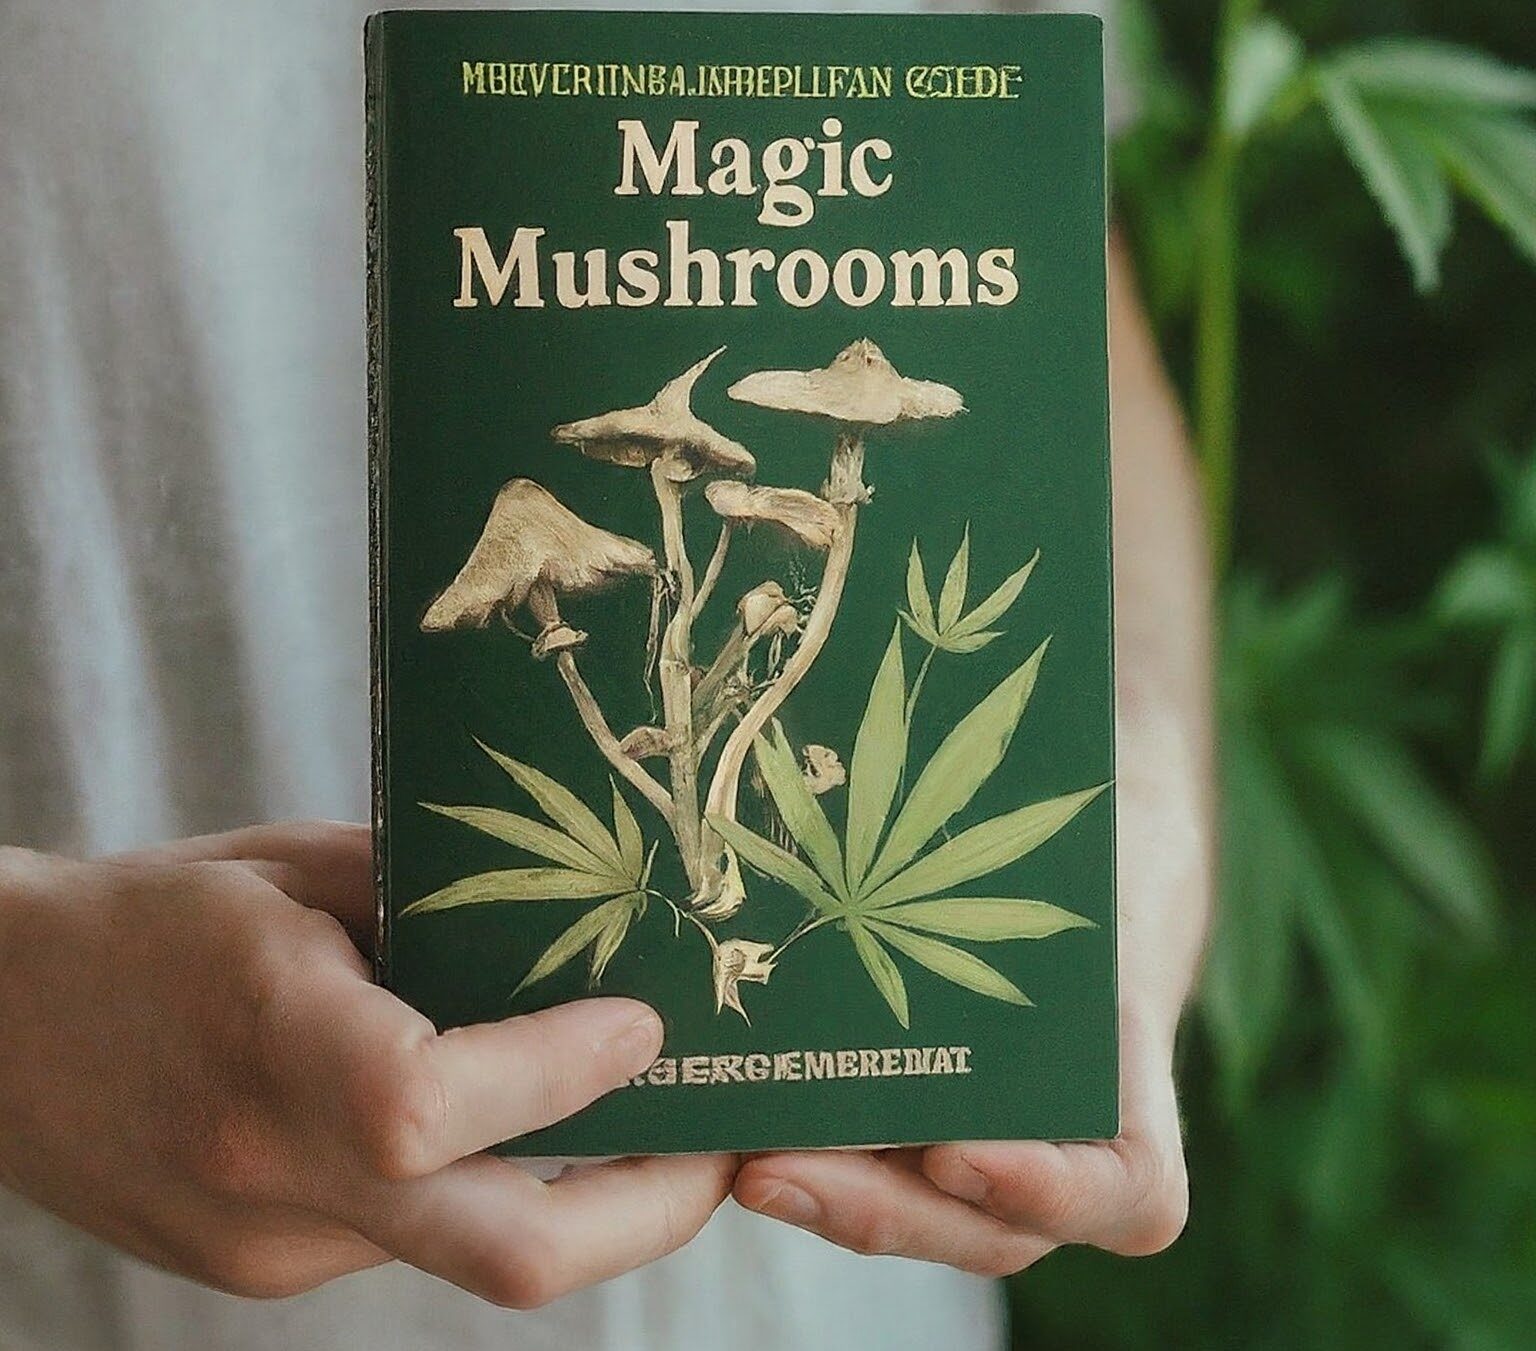 Medicinal Magic Mushrooms for sale on this website: shrooms medic